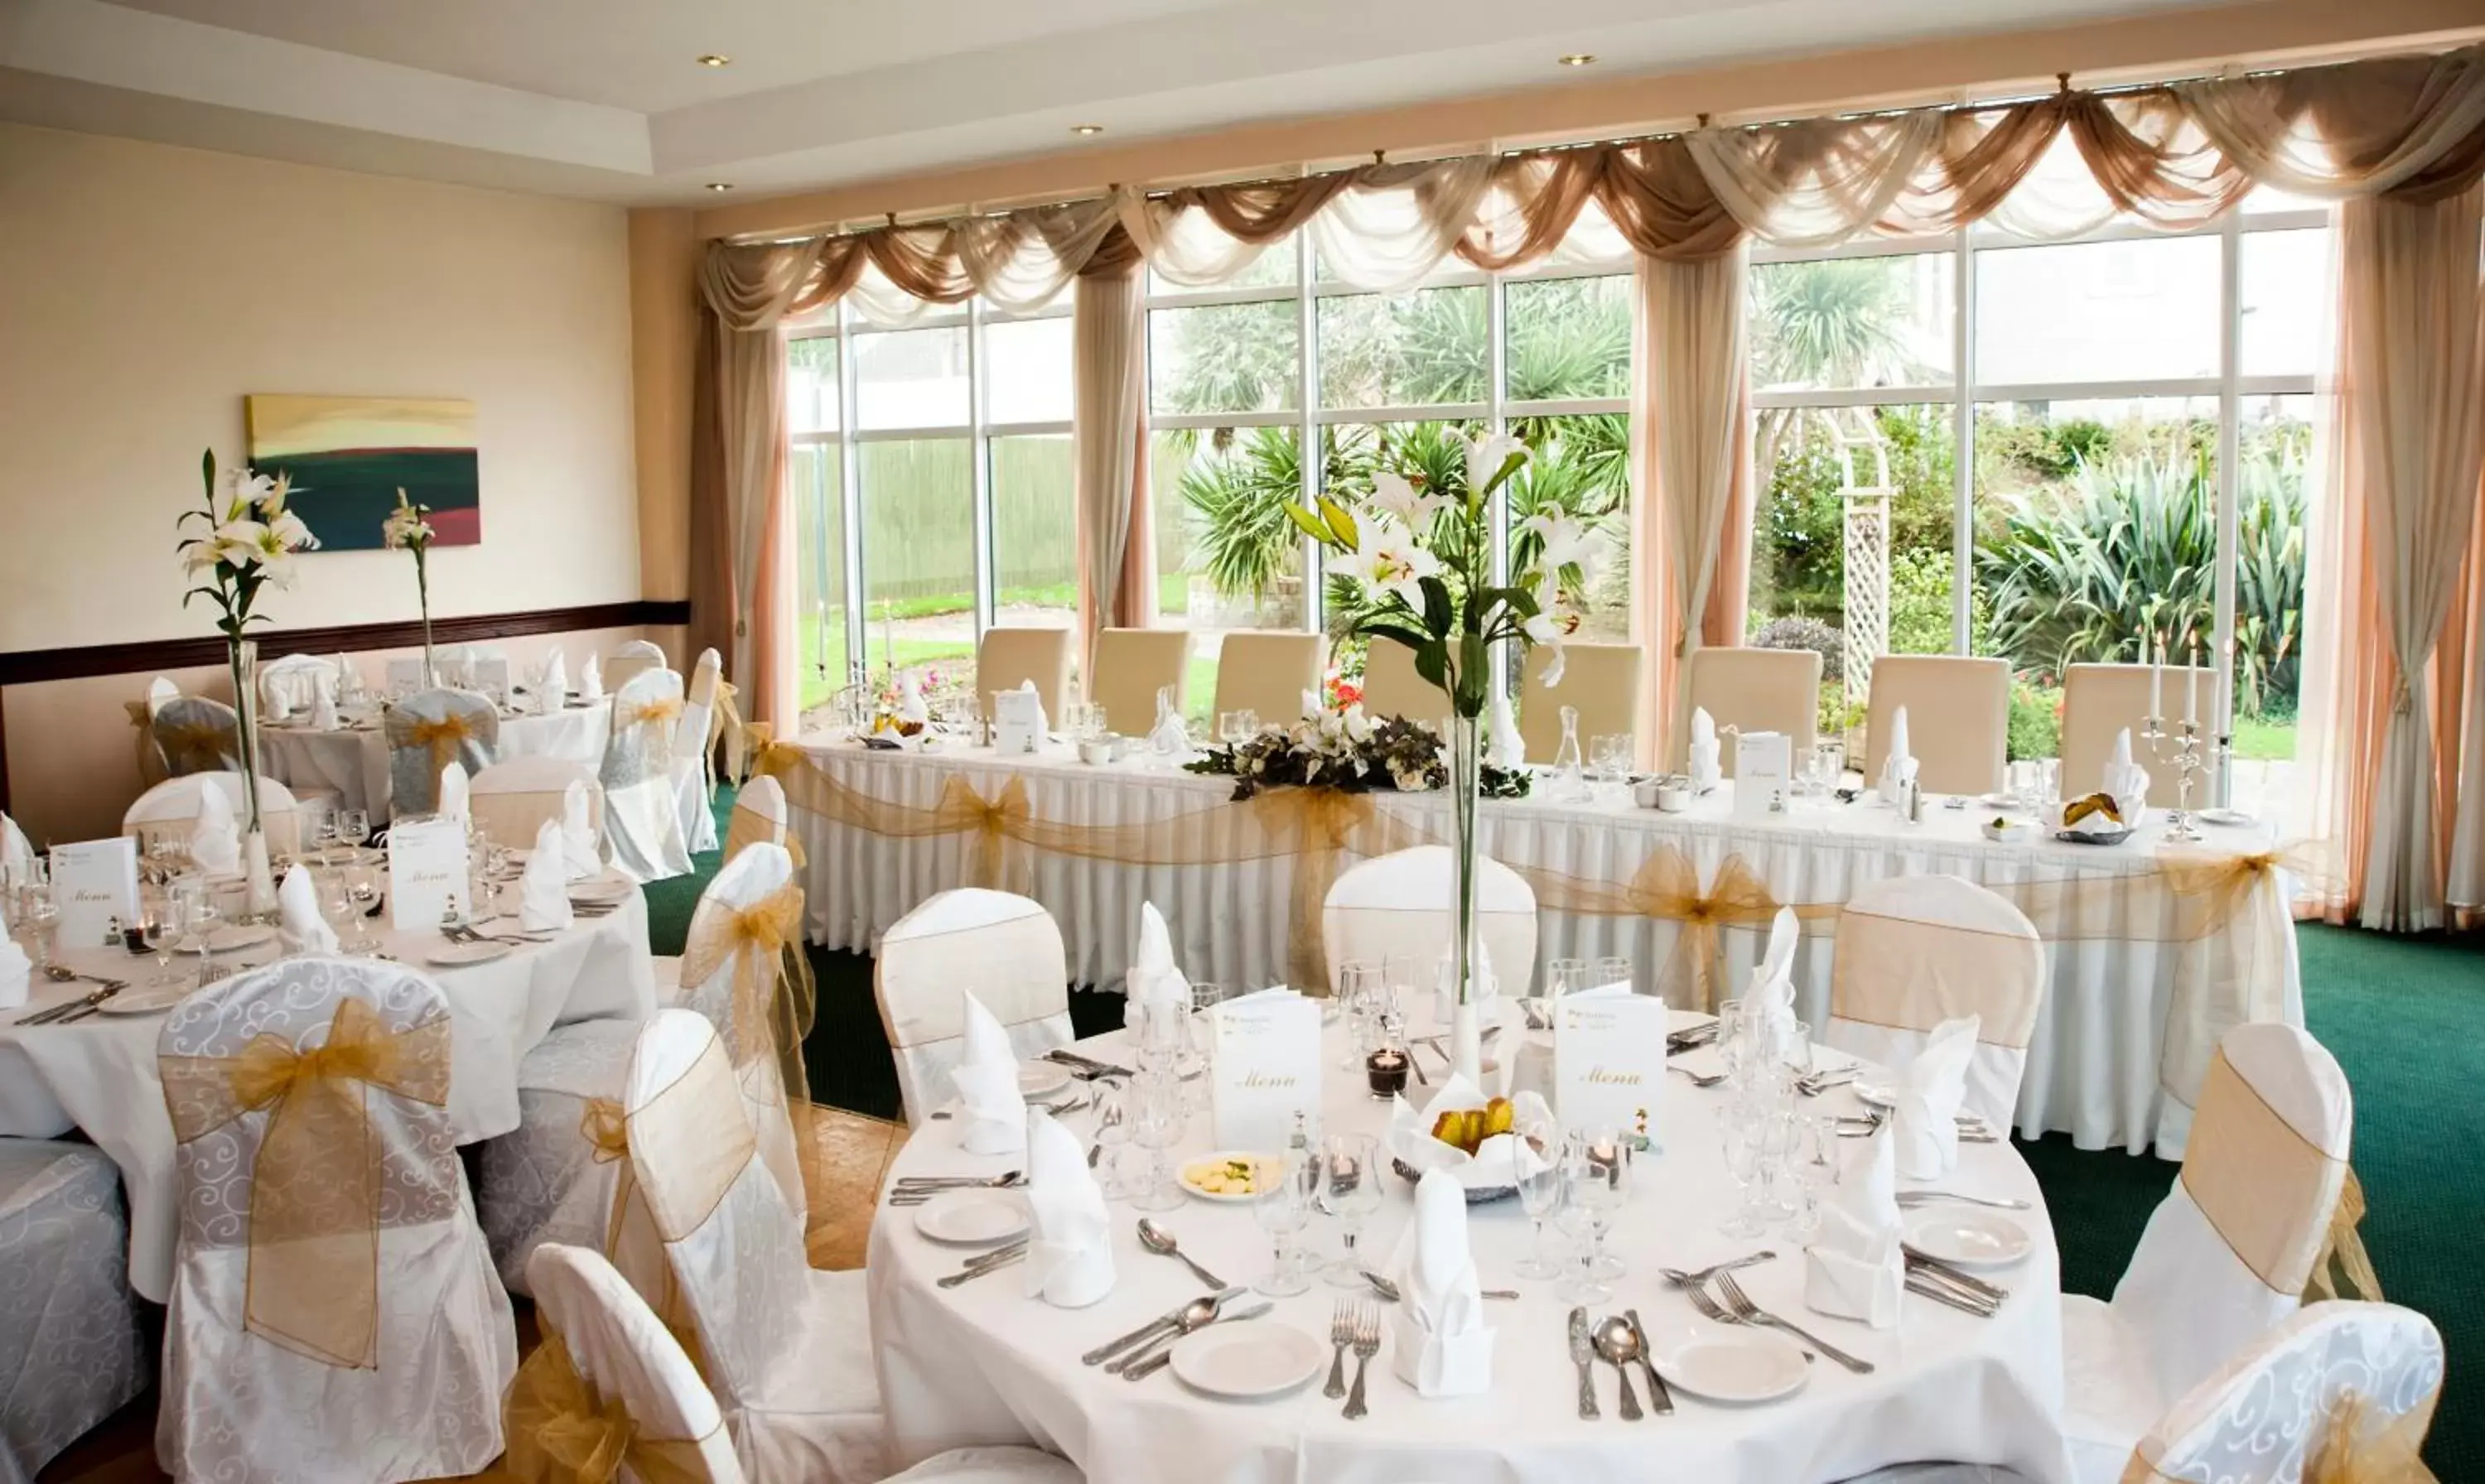 Banquet/Function facilities, Banquet Facilities in Majestic Hotel